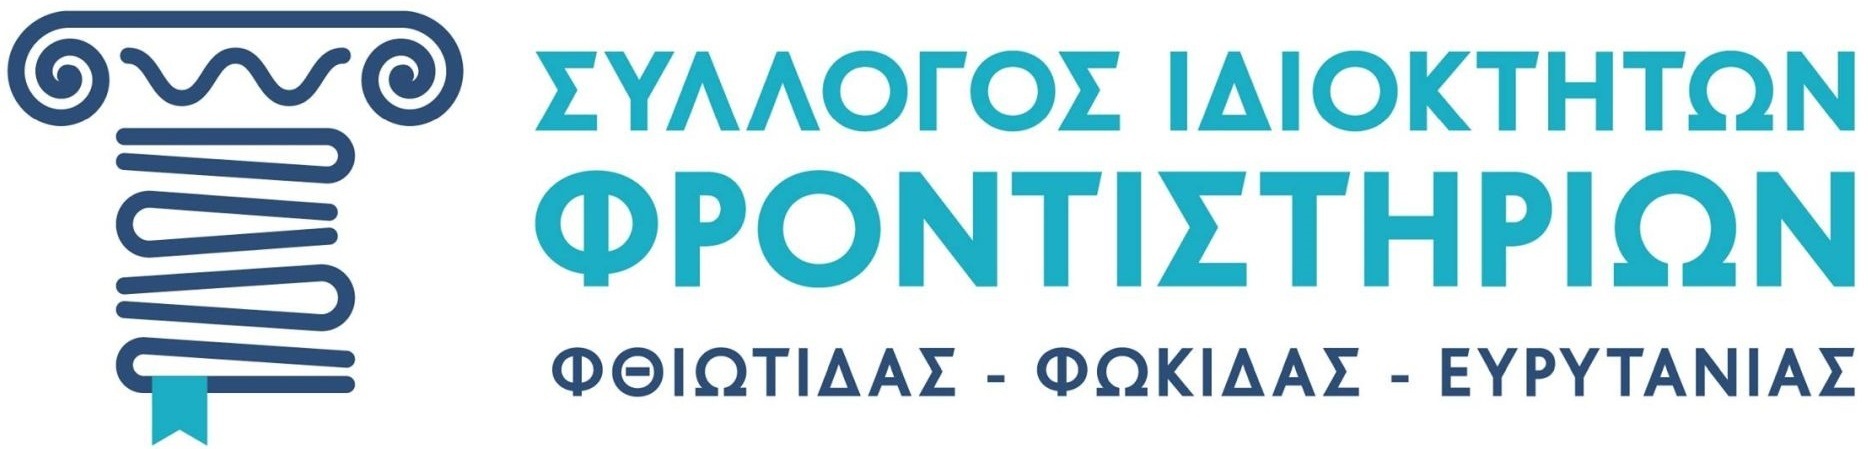 Syllogos Frontistirion Logo